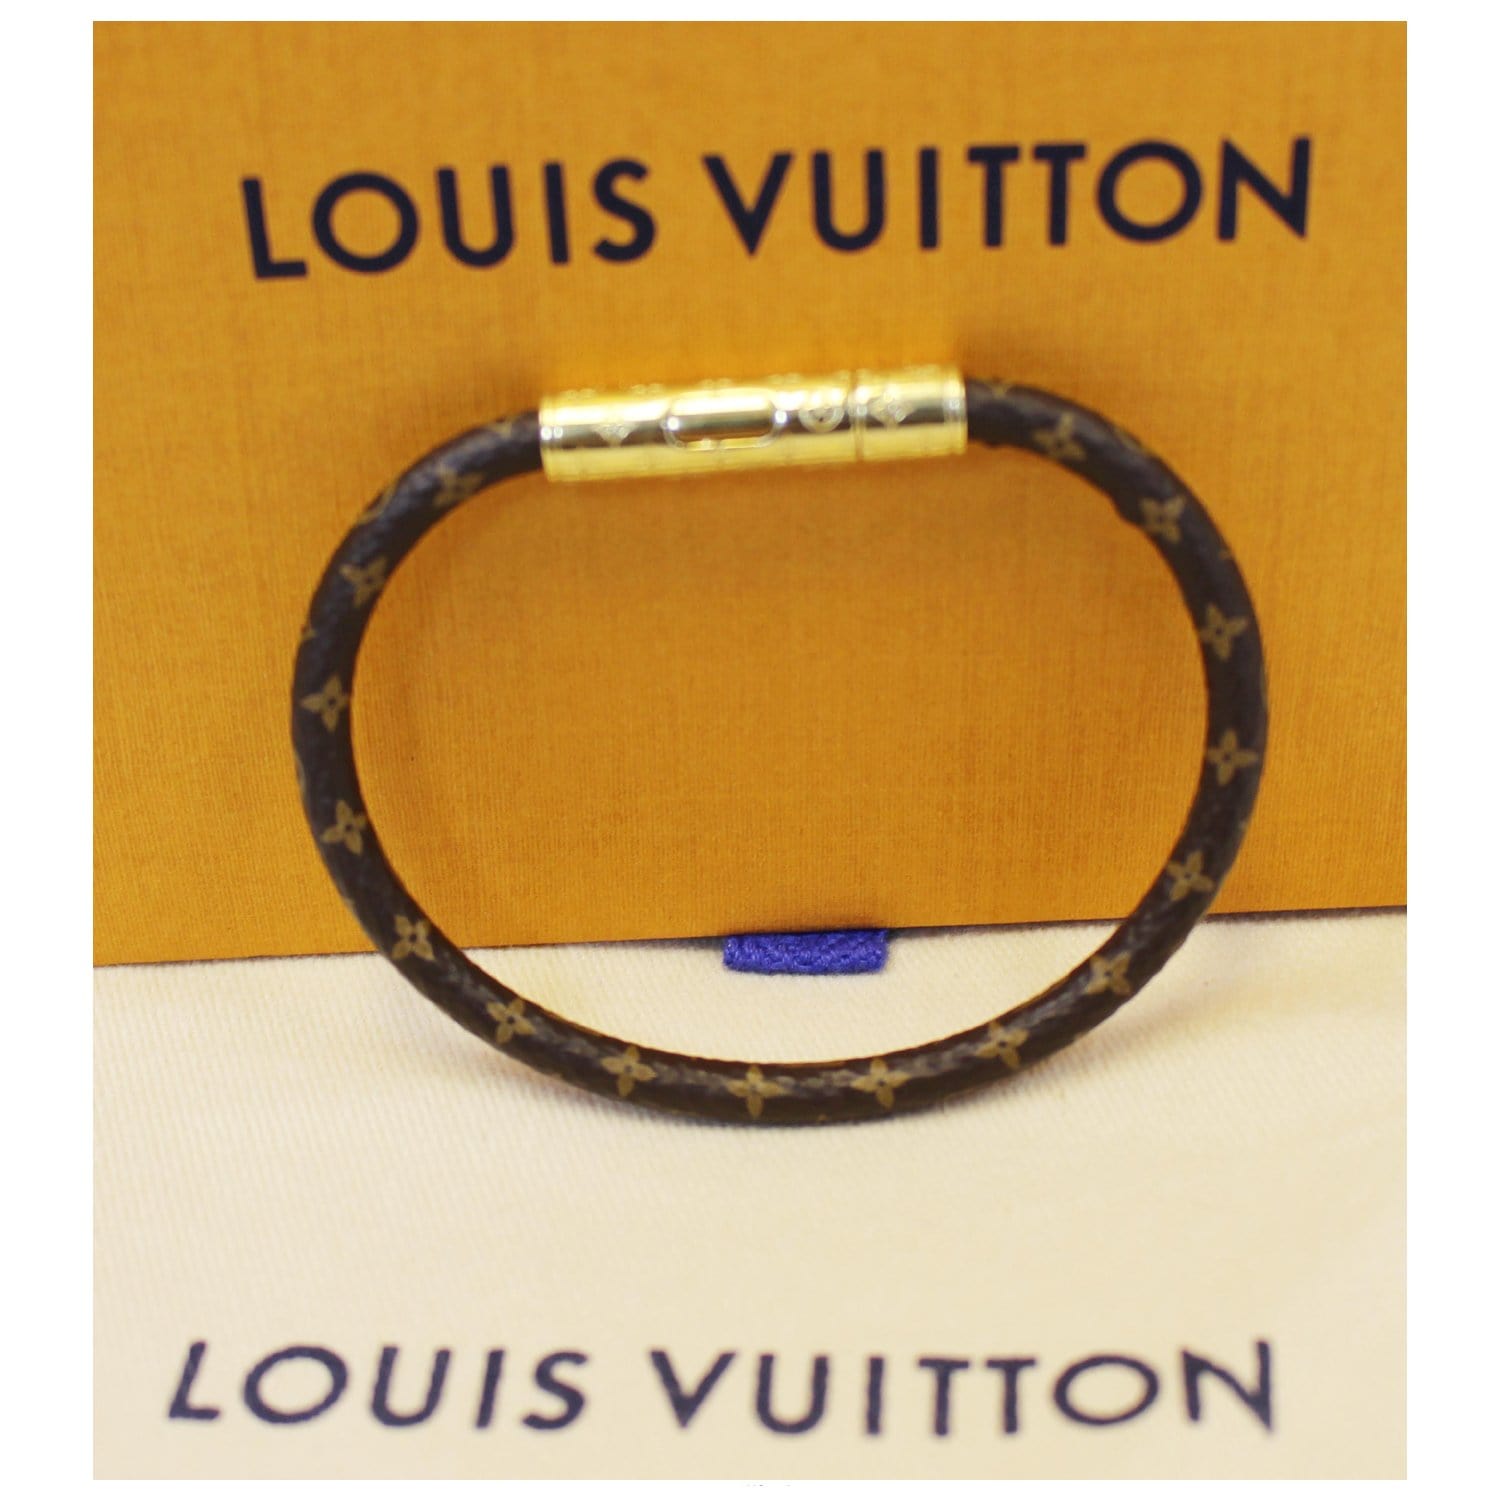 LV Confidential bracelet